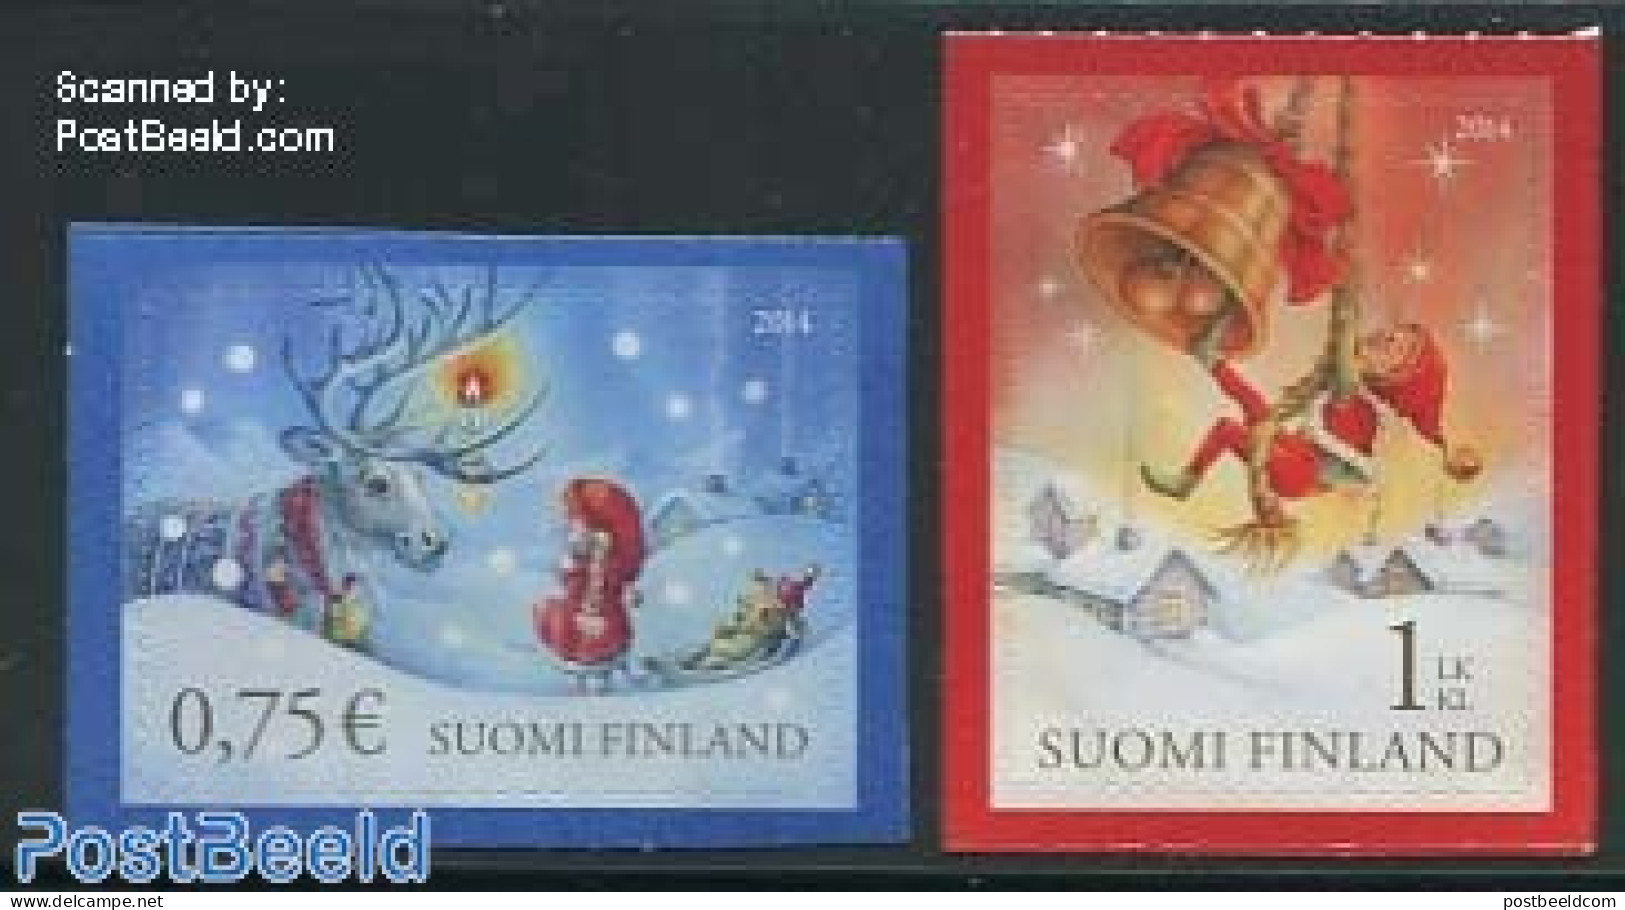 Finland 2014 Christmas 2v S-a, Mint NH, Religion - Various - Christmas - Teddy Bears - Ongebruikt